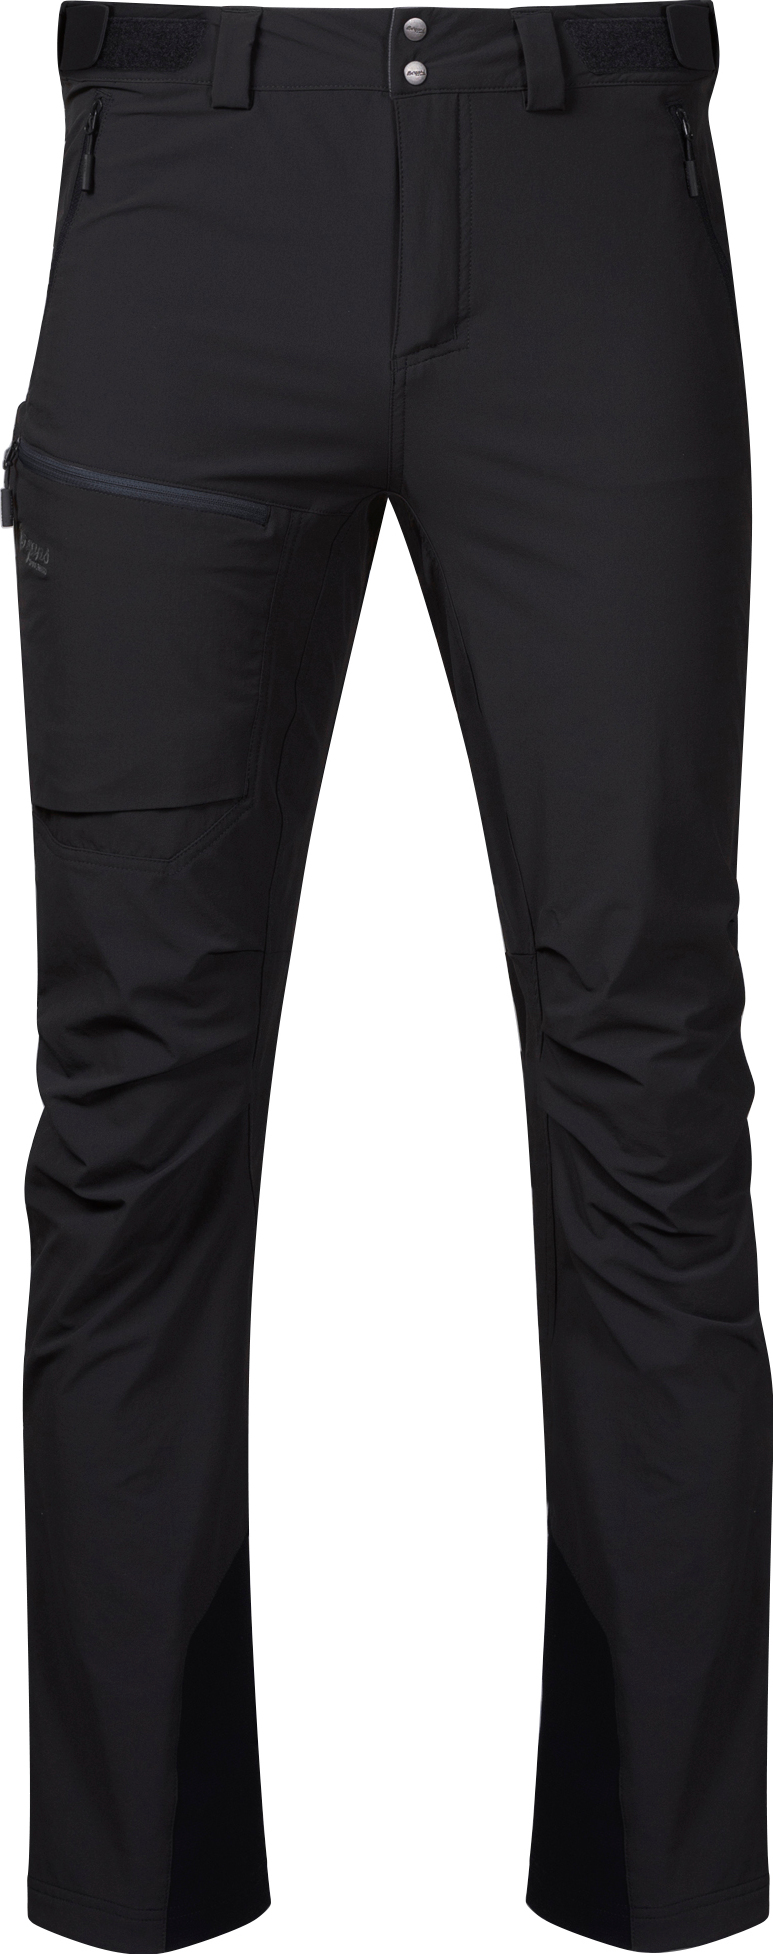 Bergans Bergans Men's Breheimen Softshell Pants Black/Solid Charcoal Short M, Black/Solid Charcoal